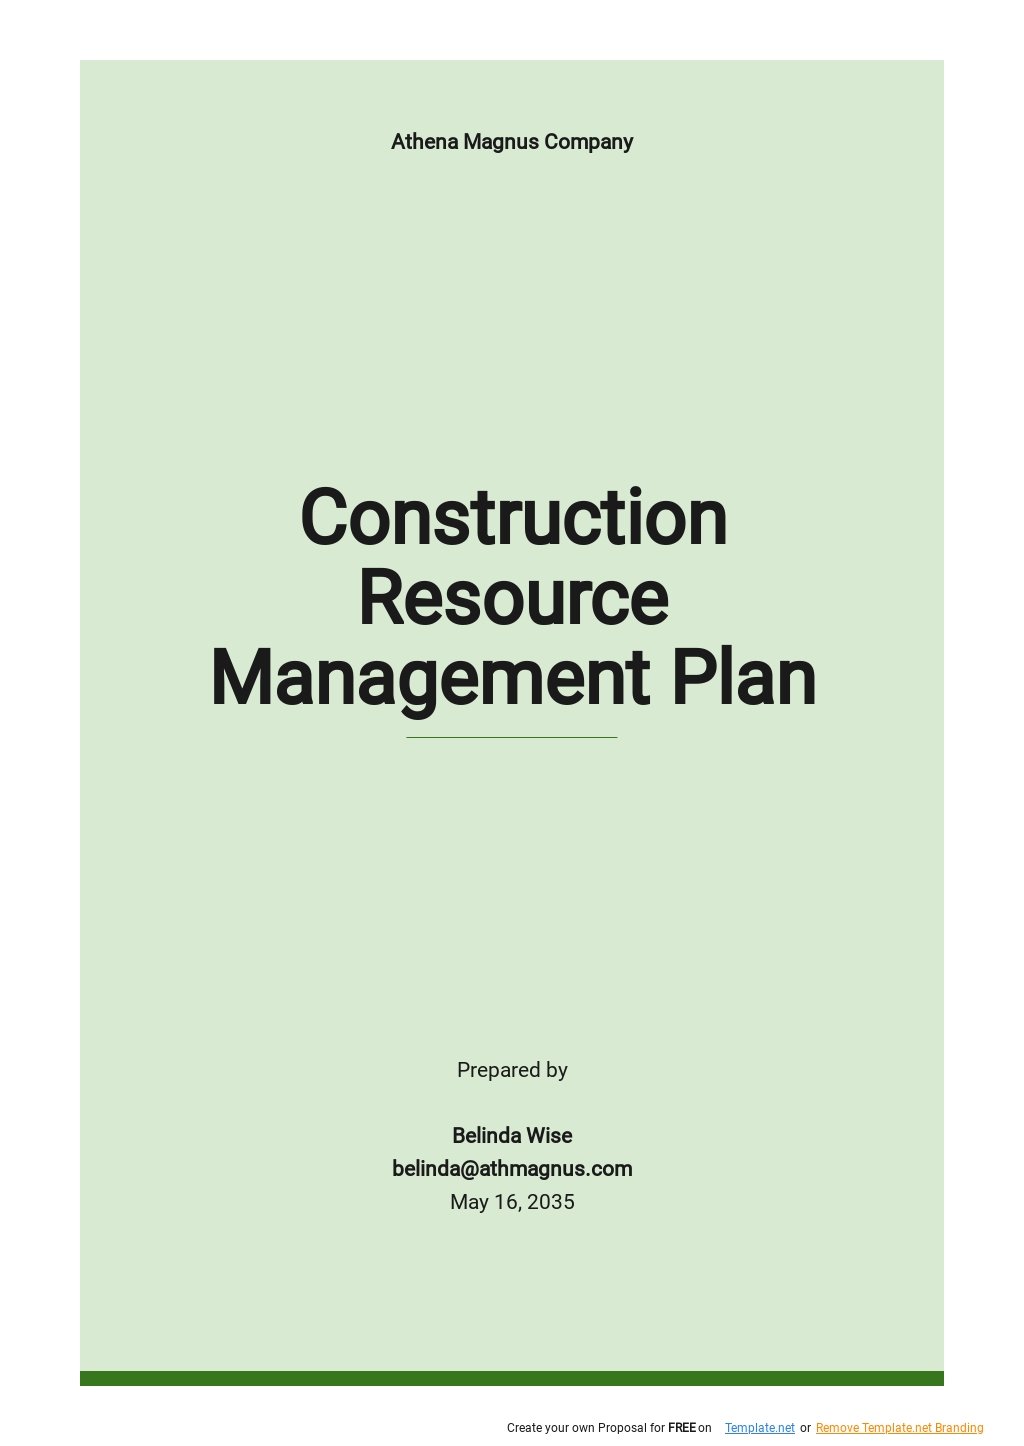 Construction Resource Management Plan Template - Google Docs, Word ...